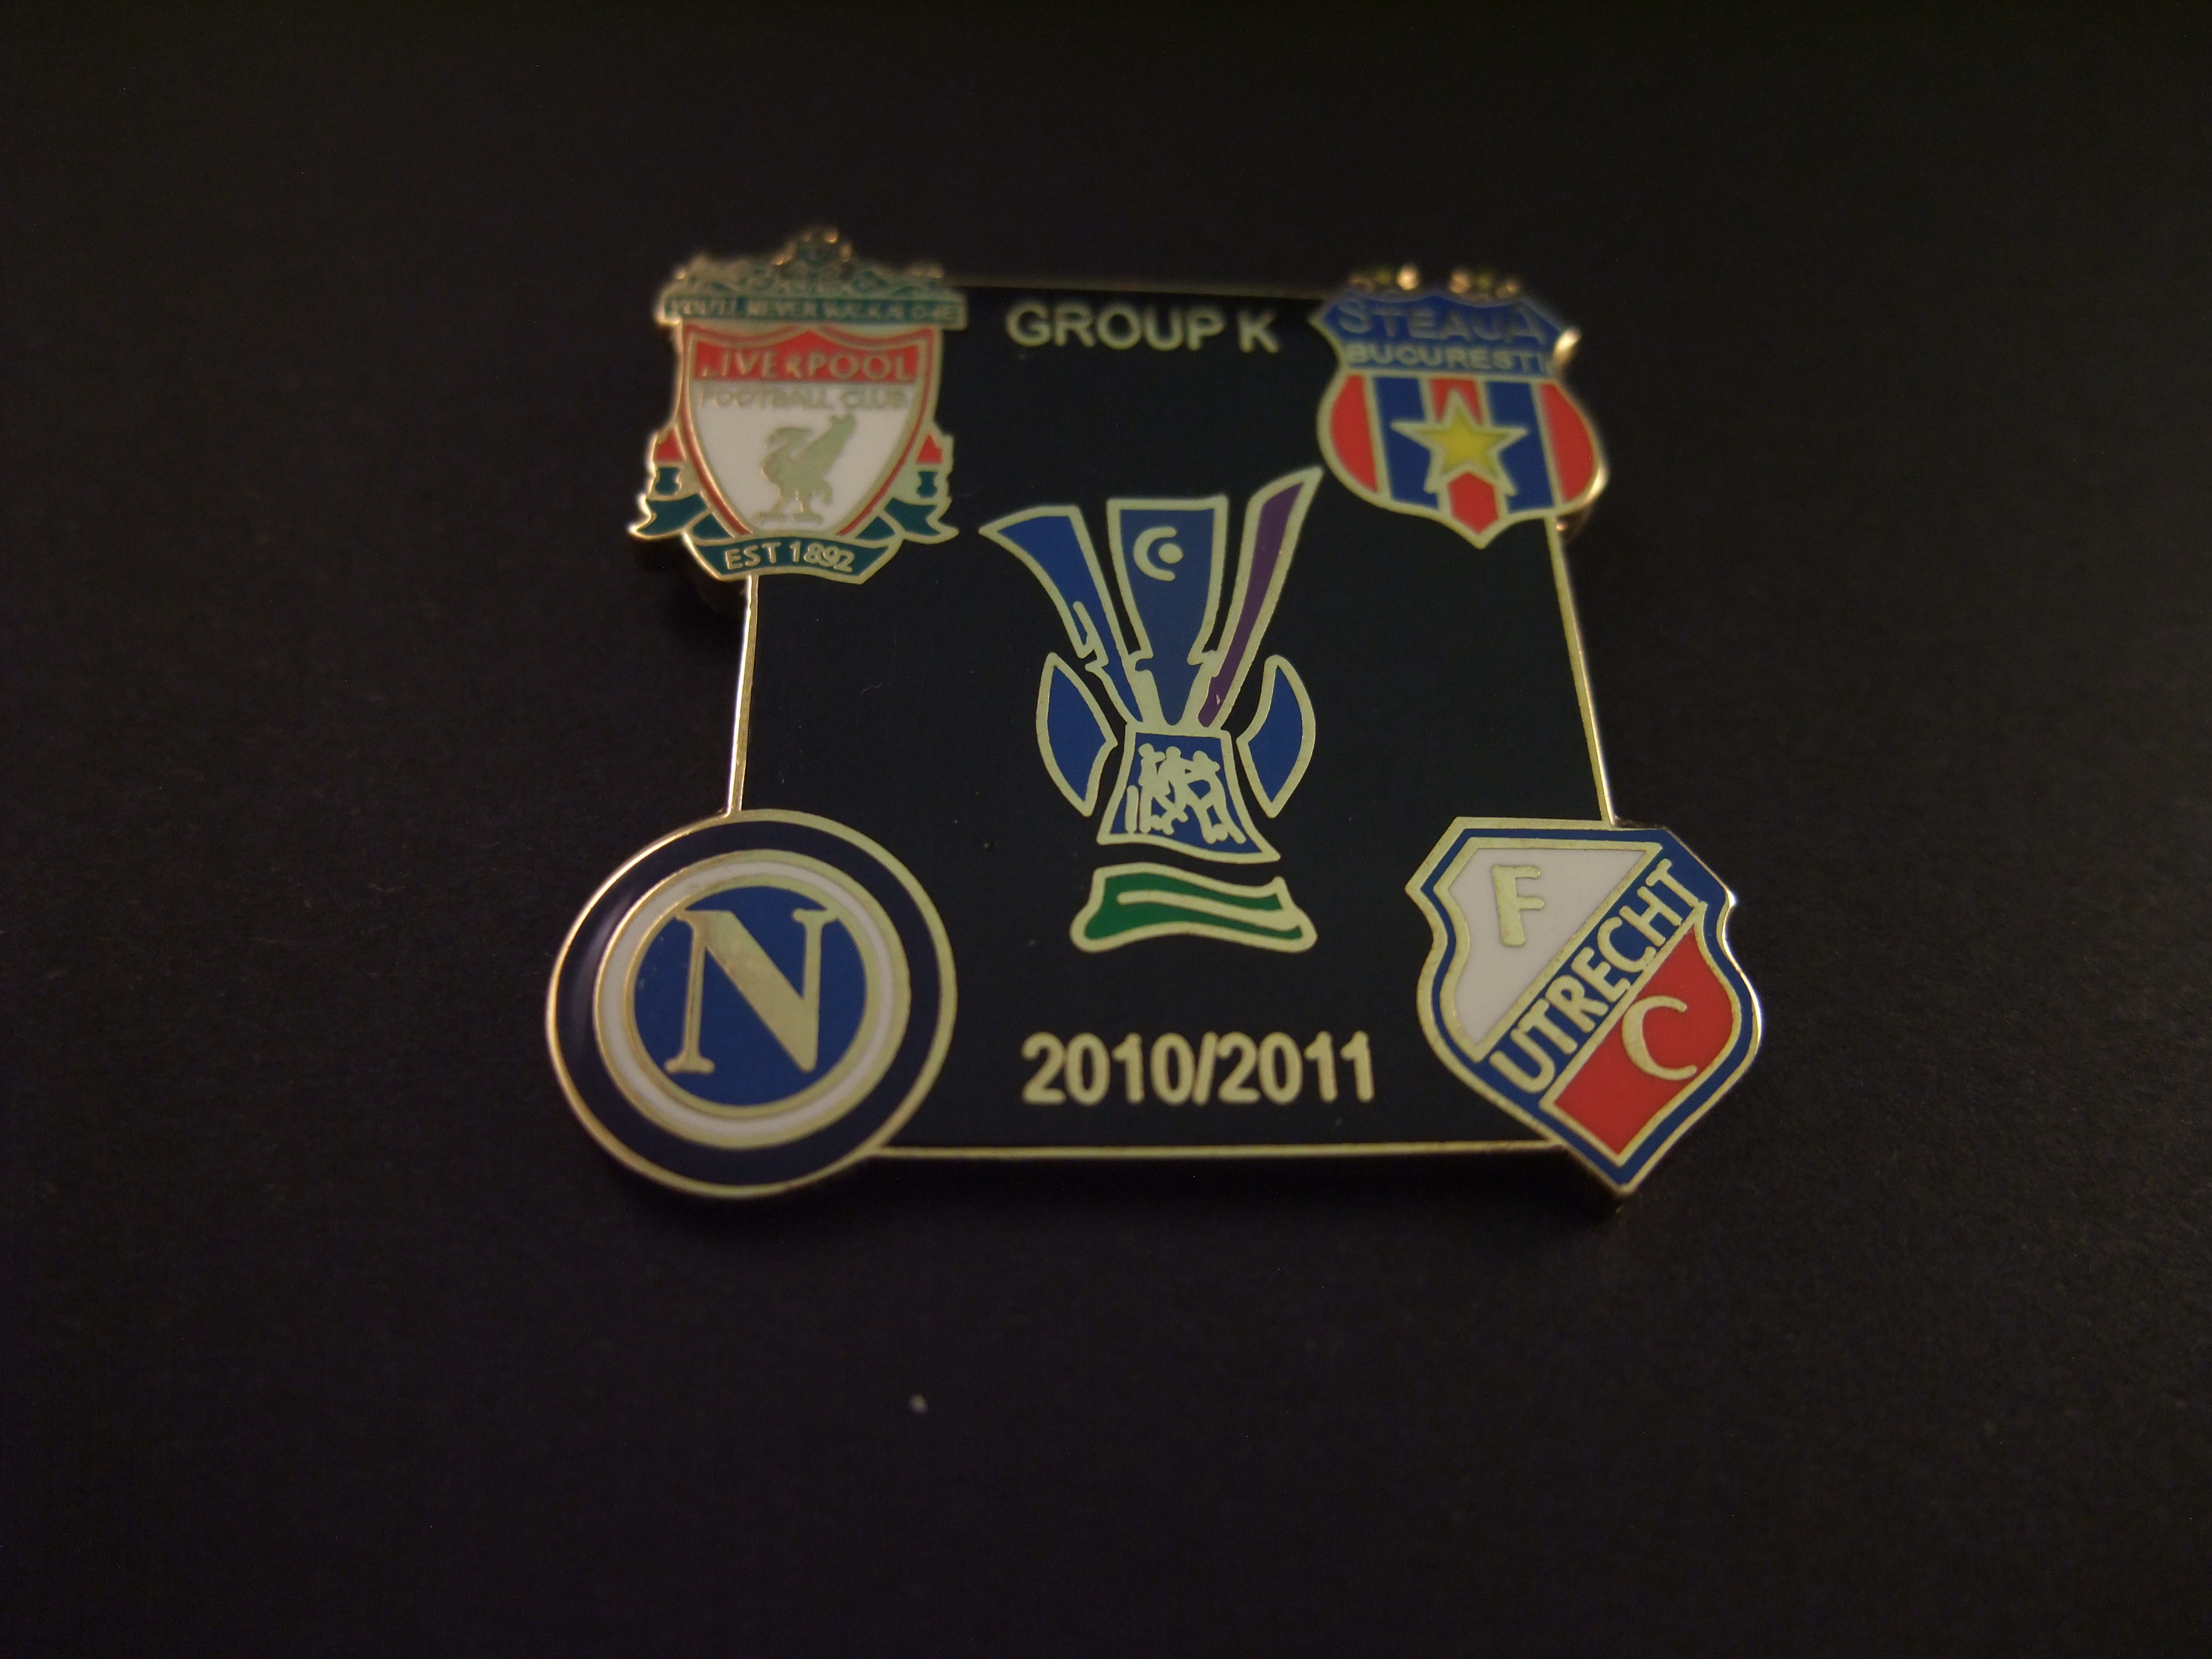 Europa League seizoen 2010-2011 Group K met Fc Utrecht , Liverpool, Steaua Boekarest,en Napoli zwart